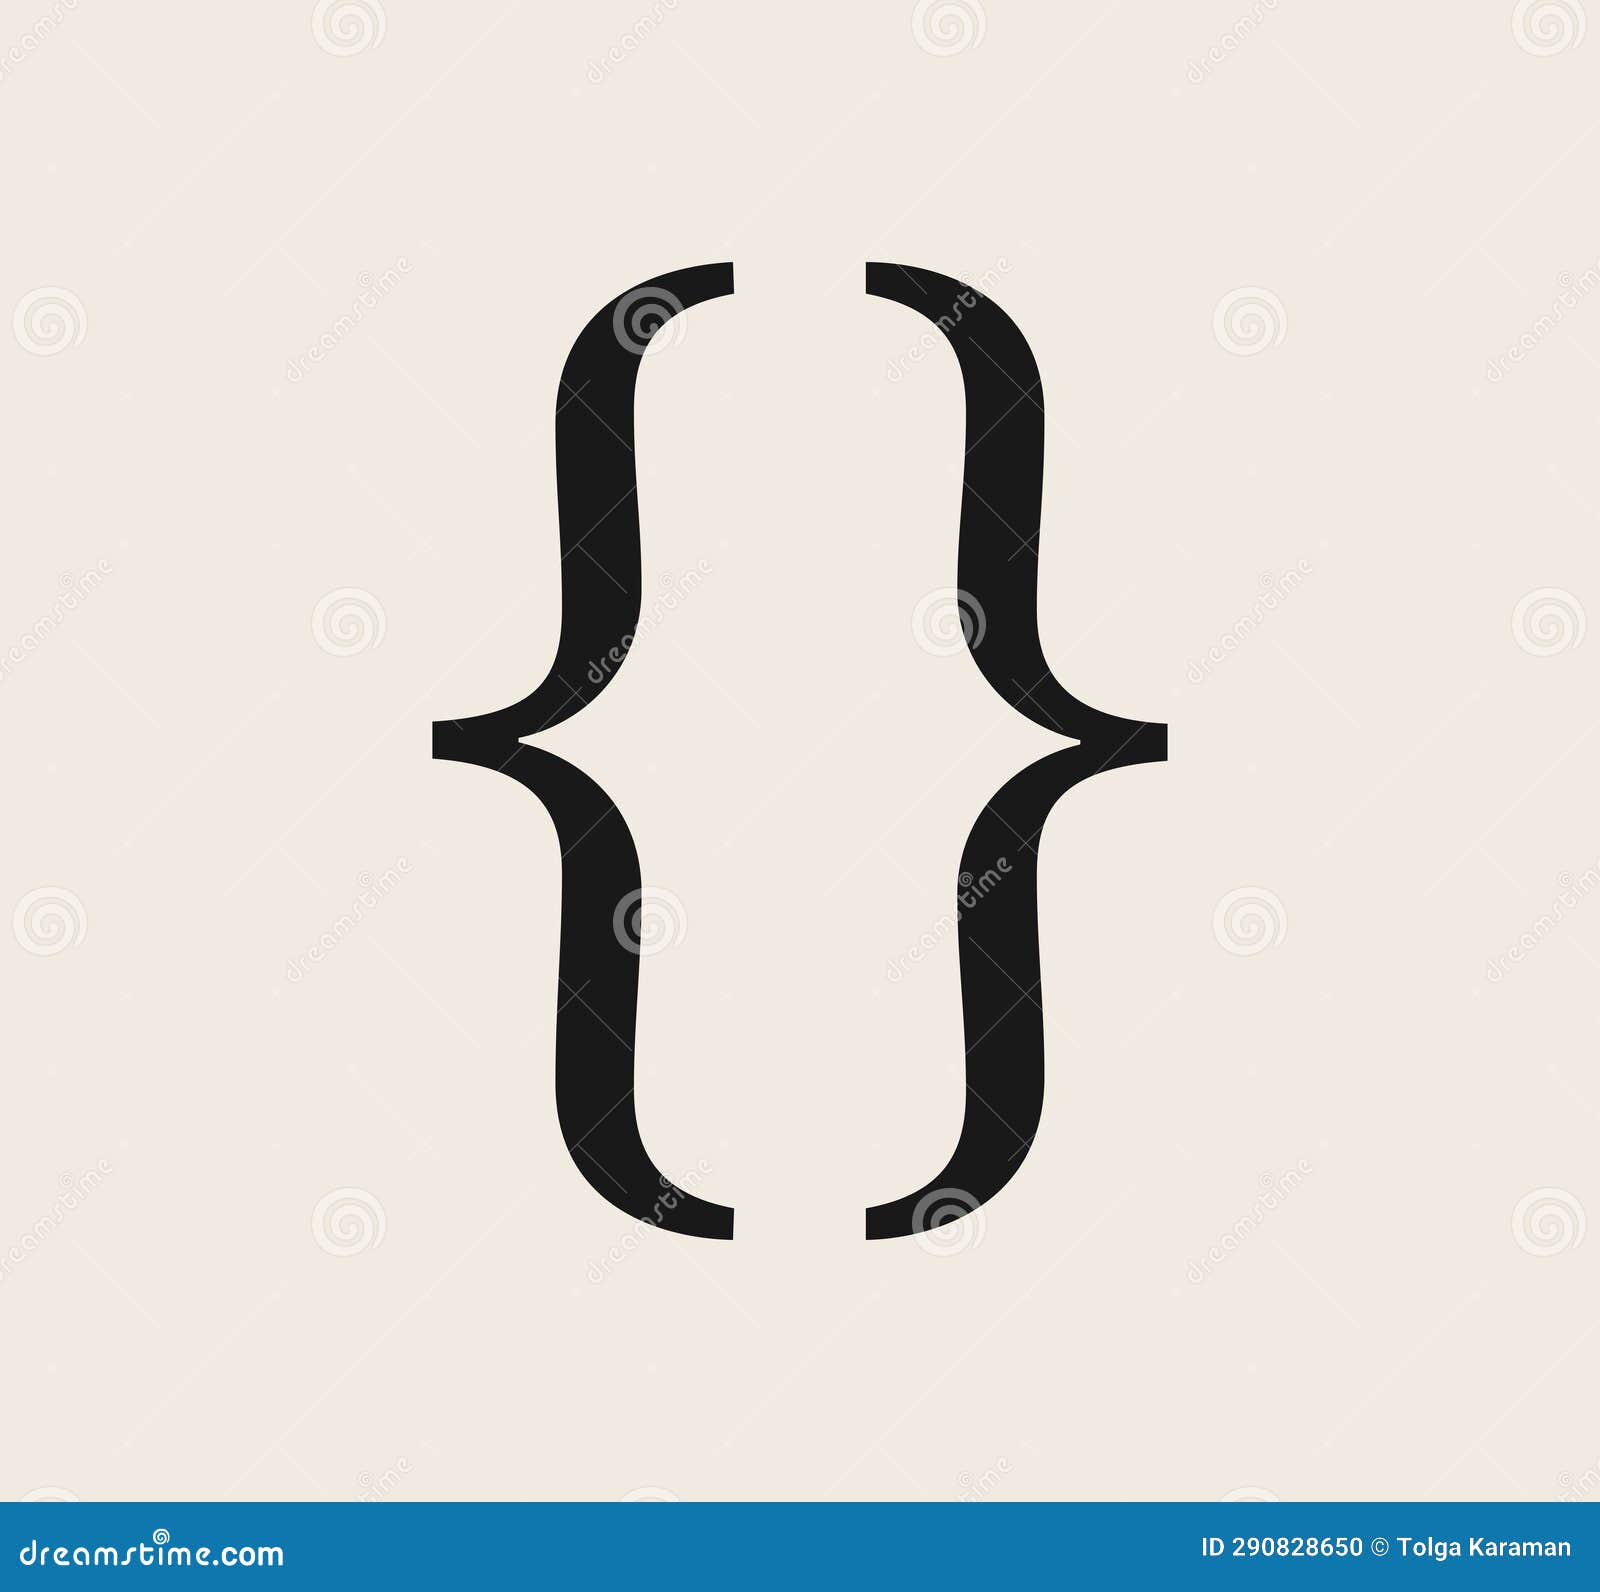 Curly Braces Symbol and Dobule Braces. Stock Vector - Illustration